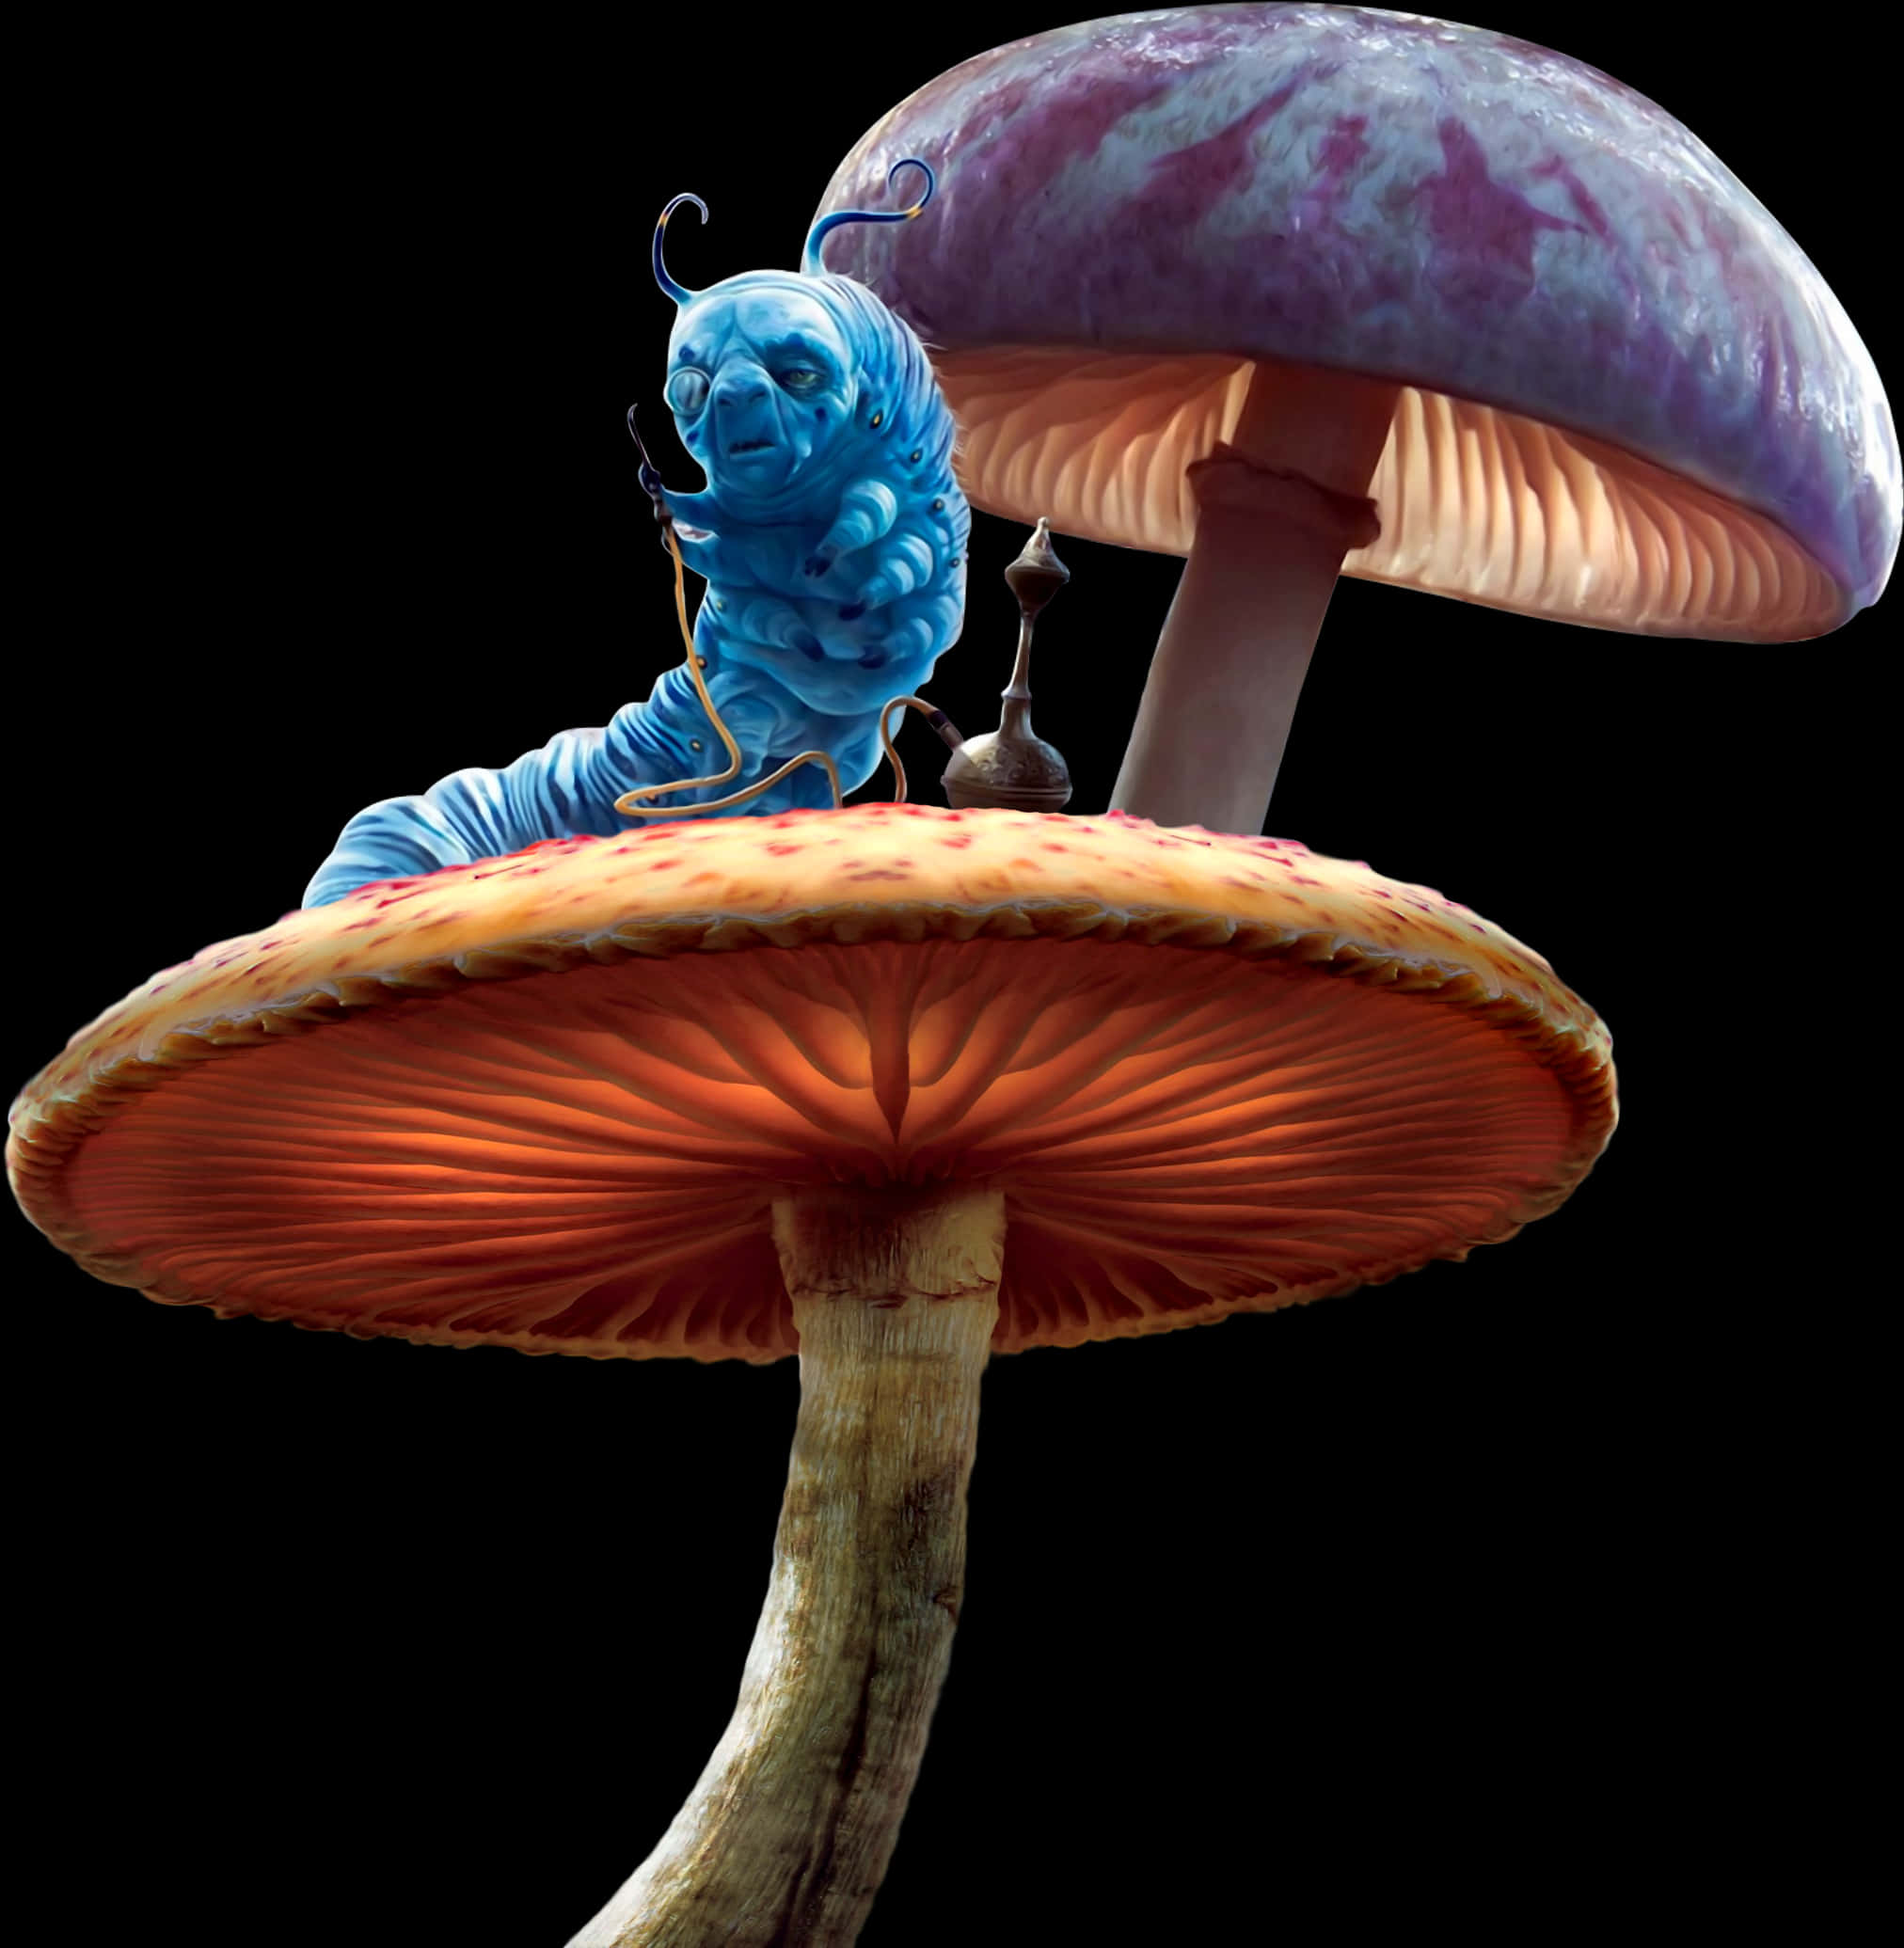 A Blue Caterpillar On A Mushroom